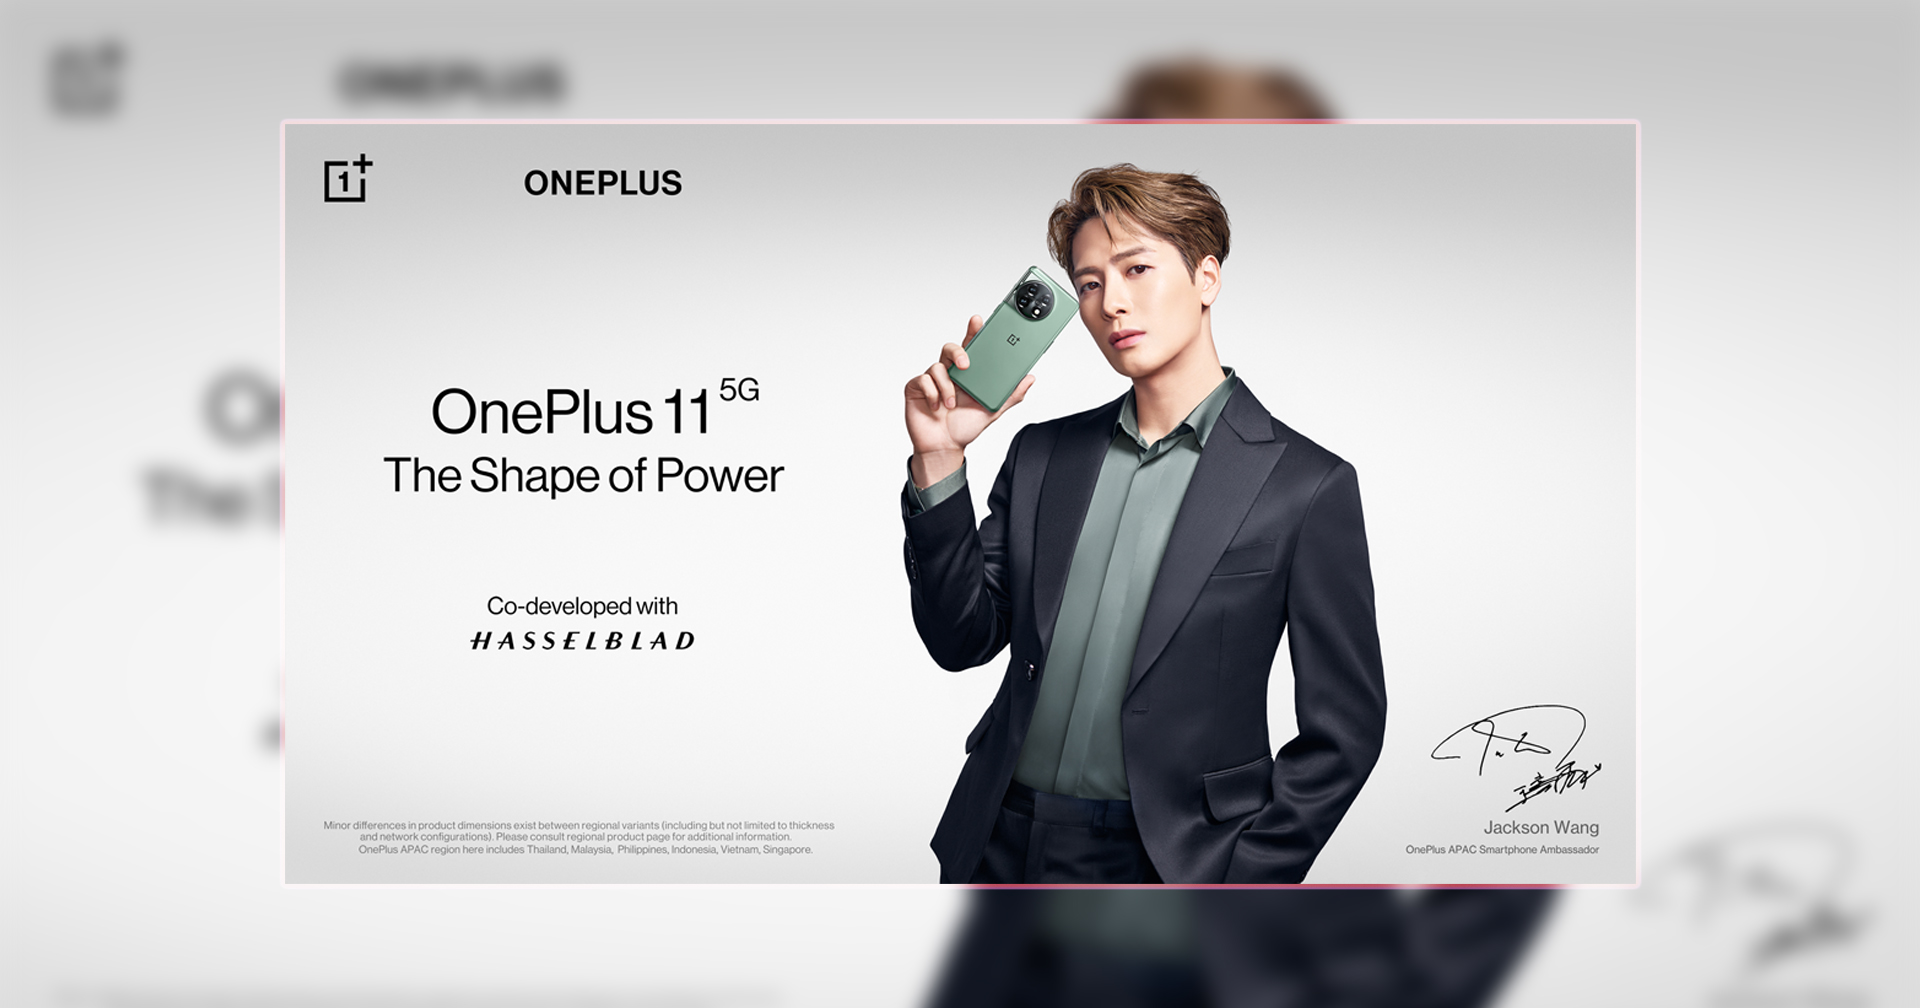 OnePlus เปิดตัว Jackson Wang ขึ้นแท่น APAC Smartphone Ambassador คนแรก พร้อมเปิดตัว OnePlus 11 5G